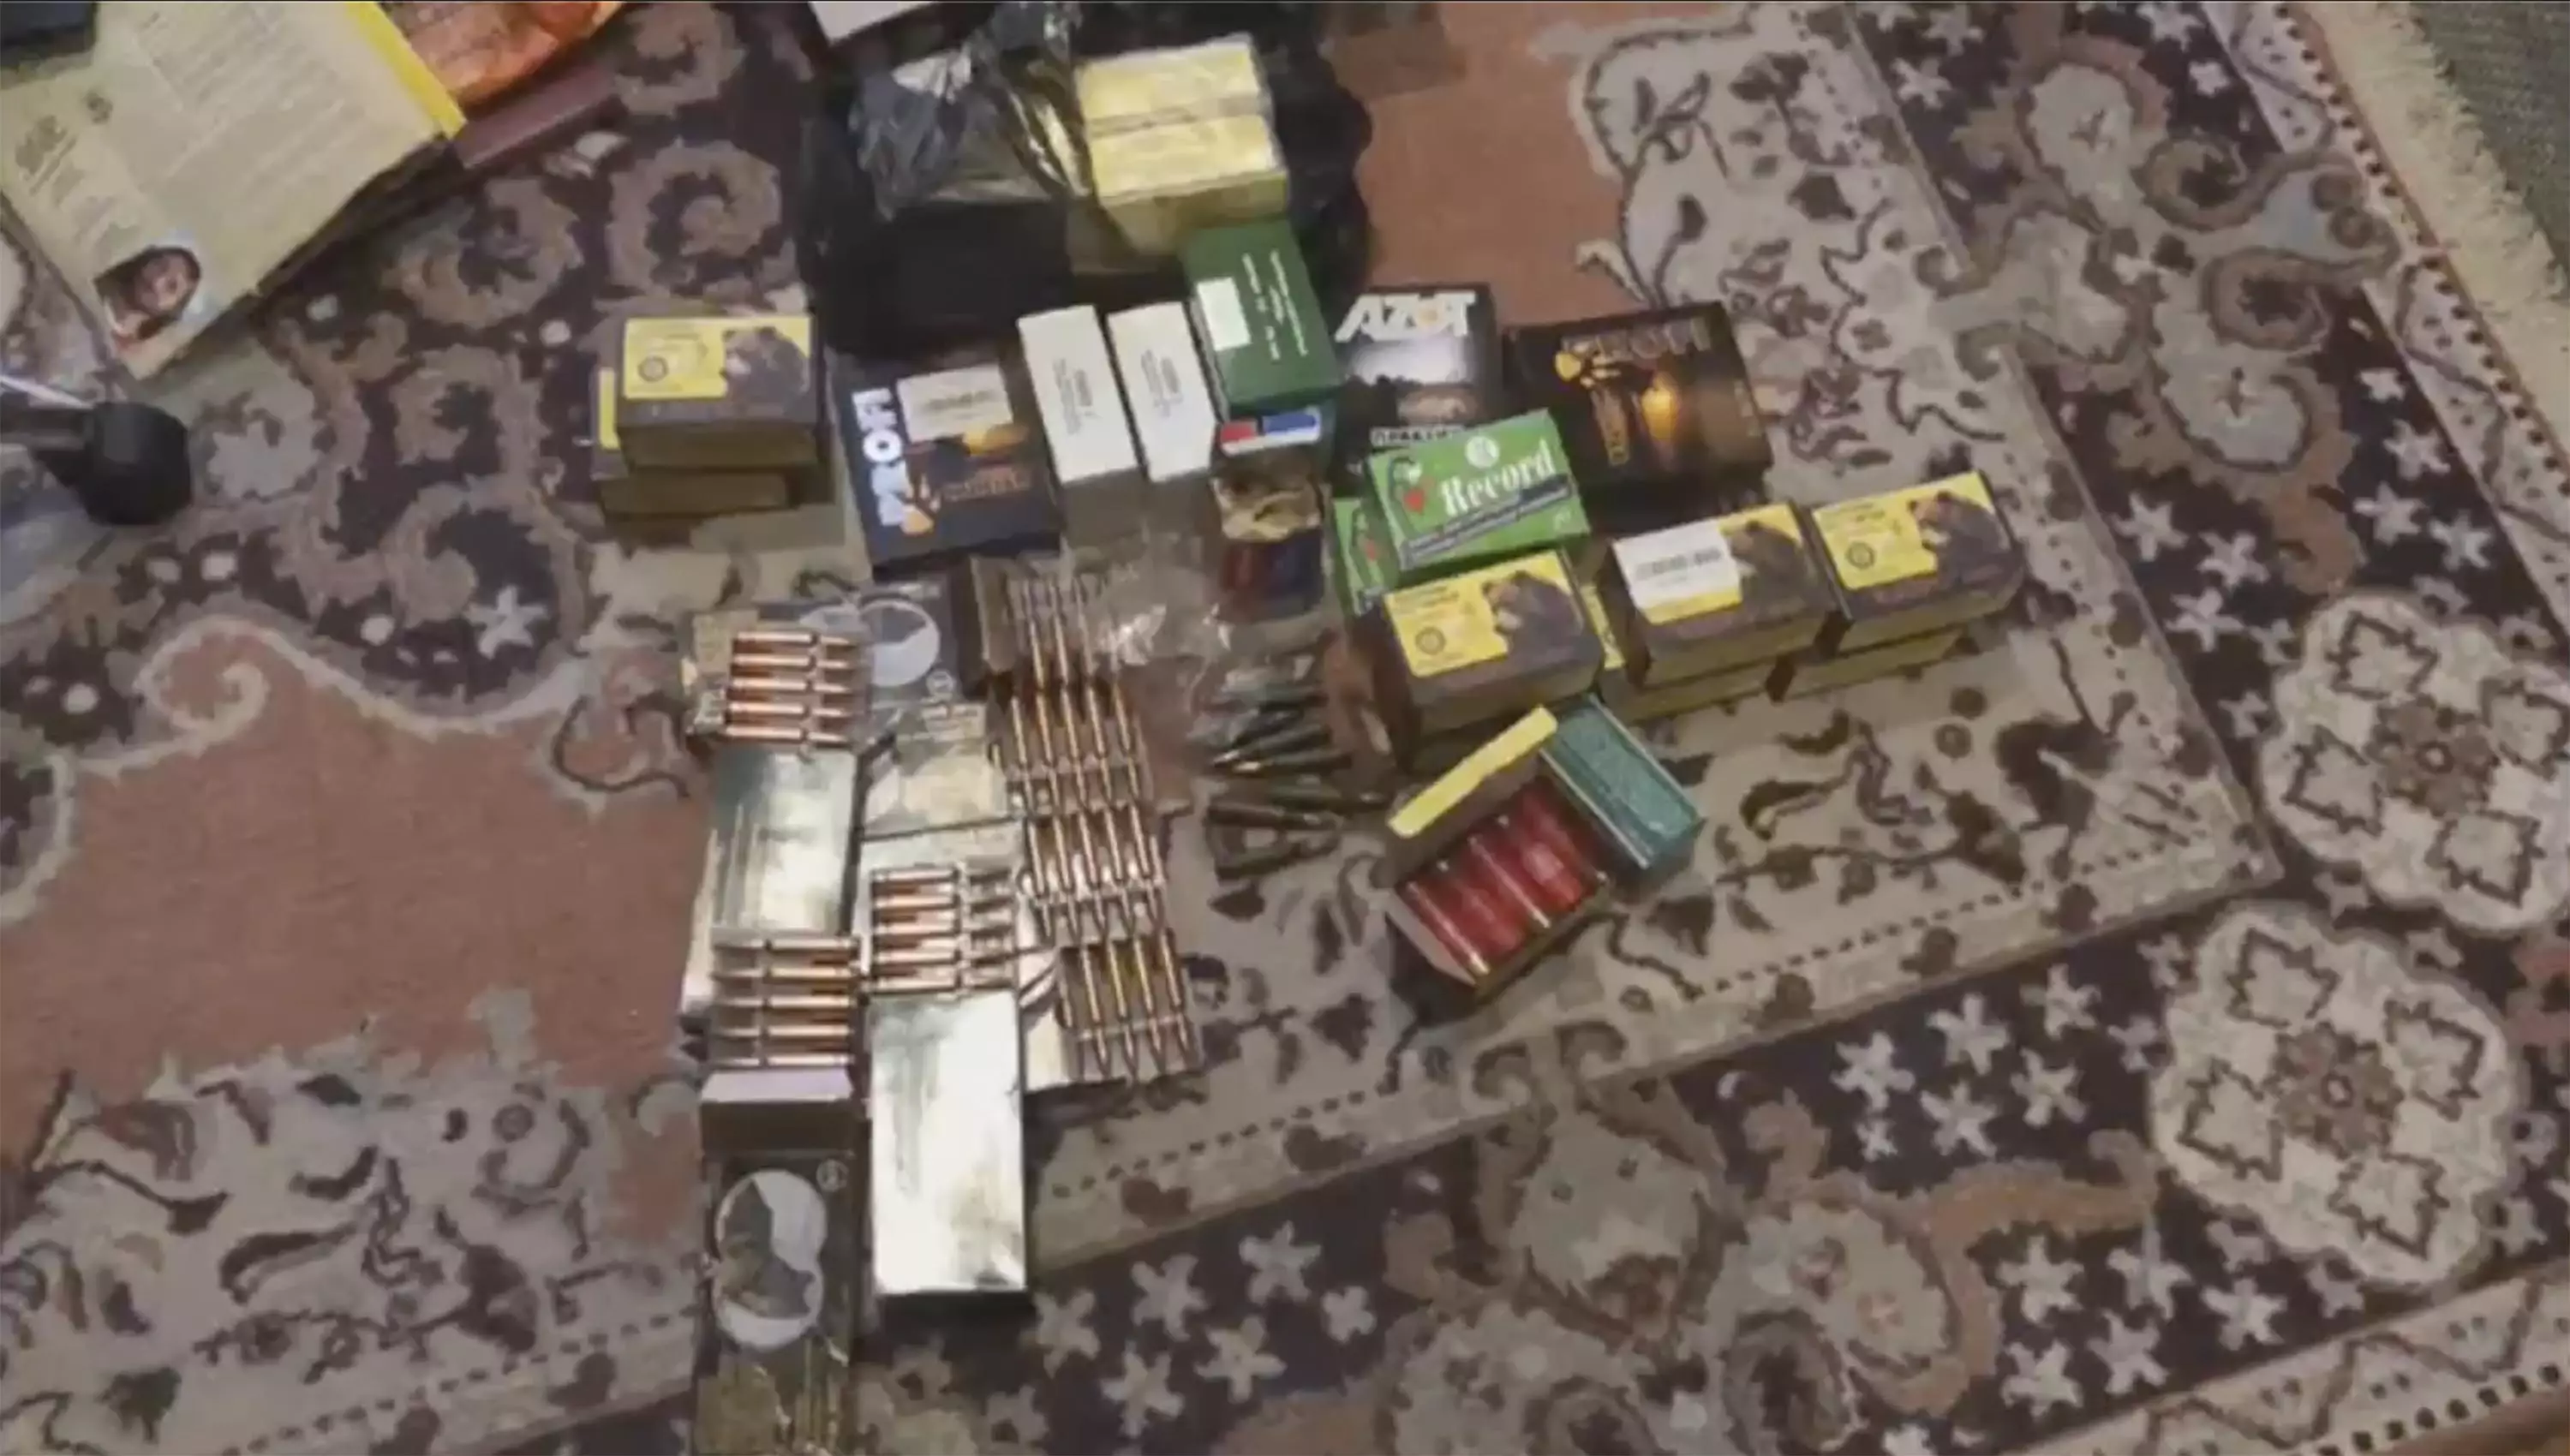 Cartridges found in Torop's house.